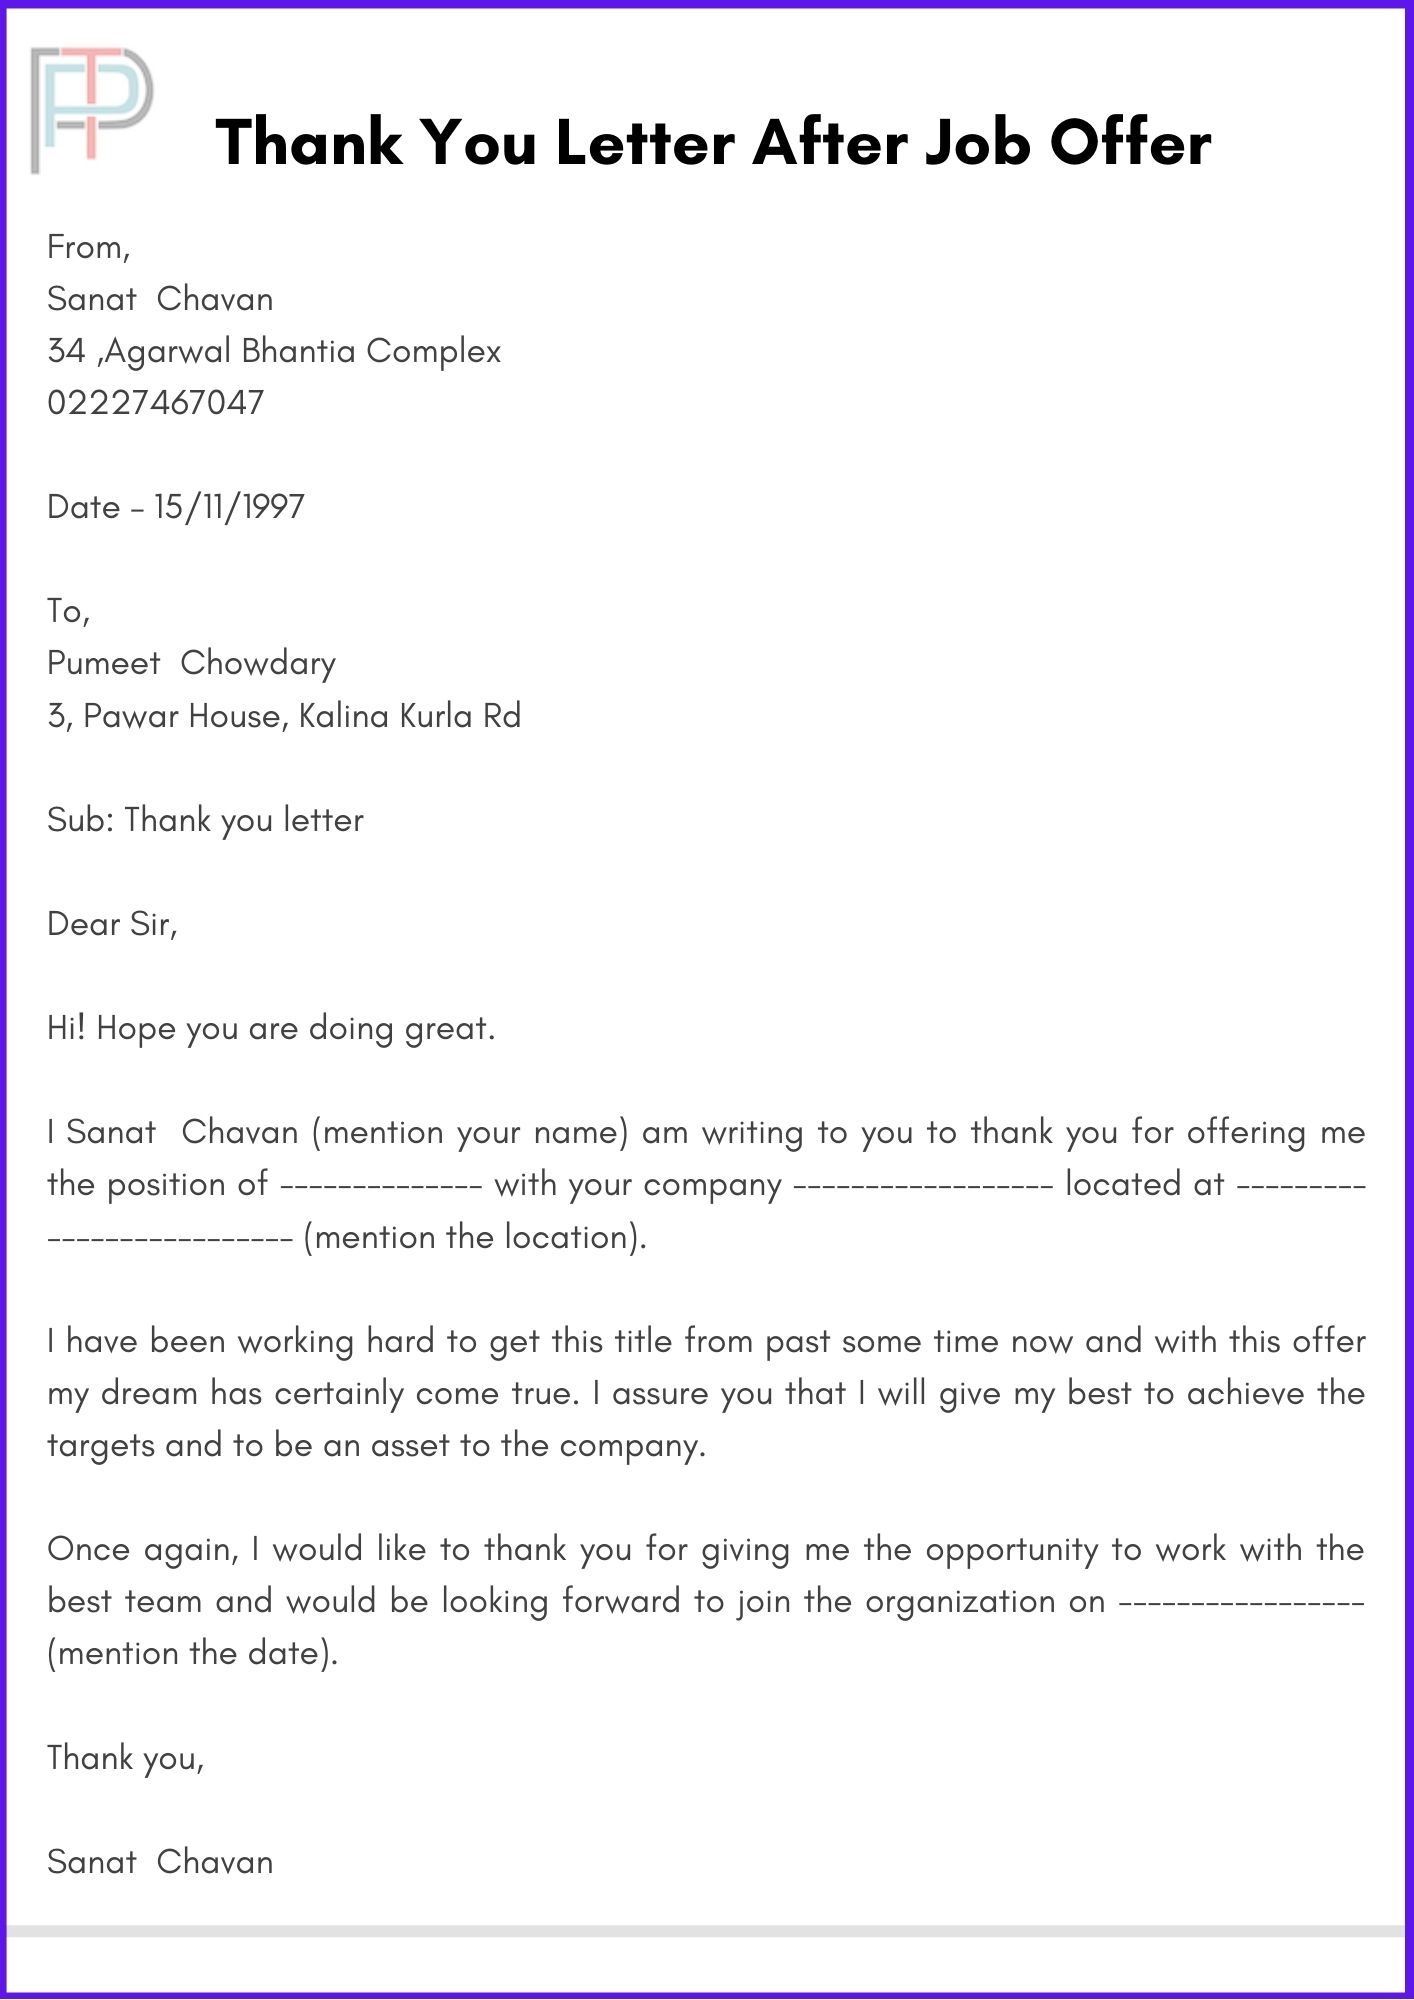 Thank You Letter After Job Offer 